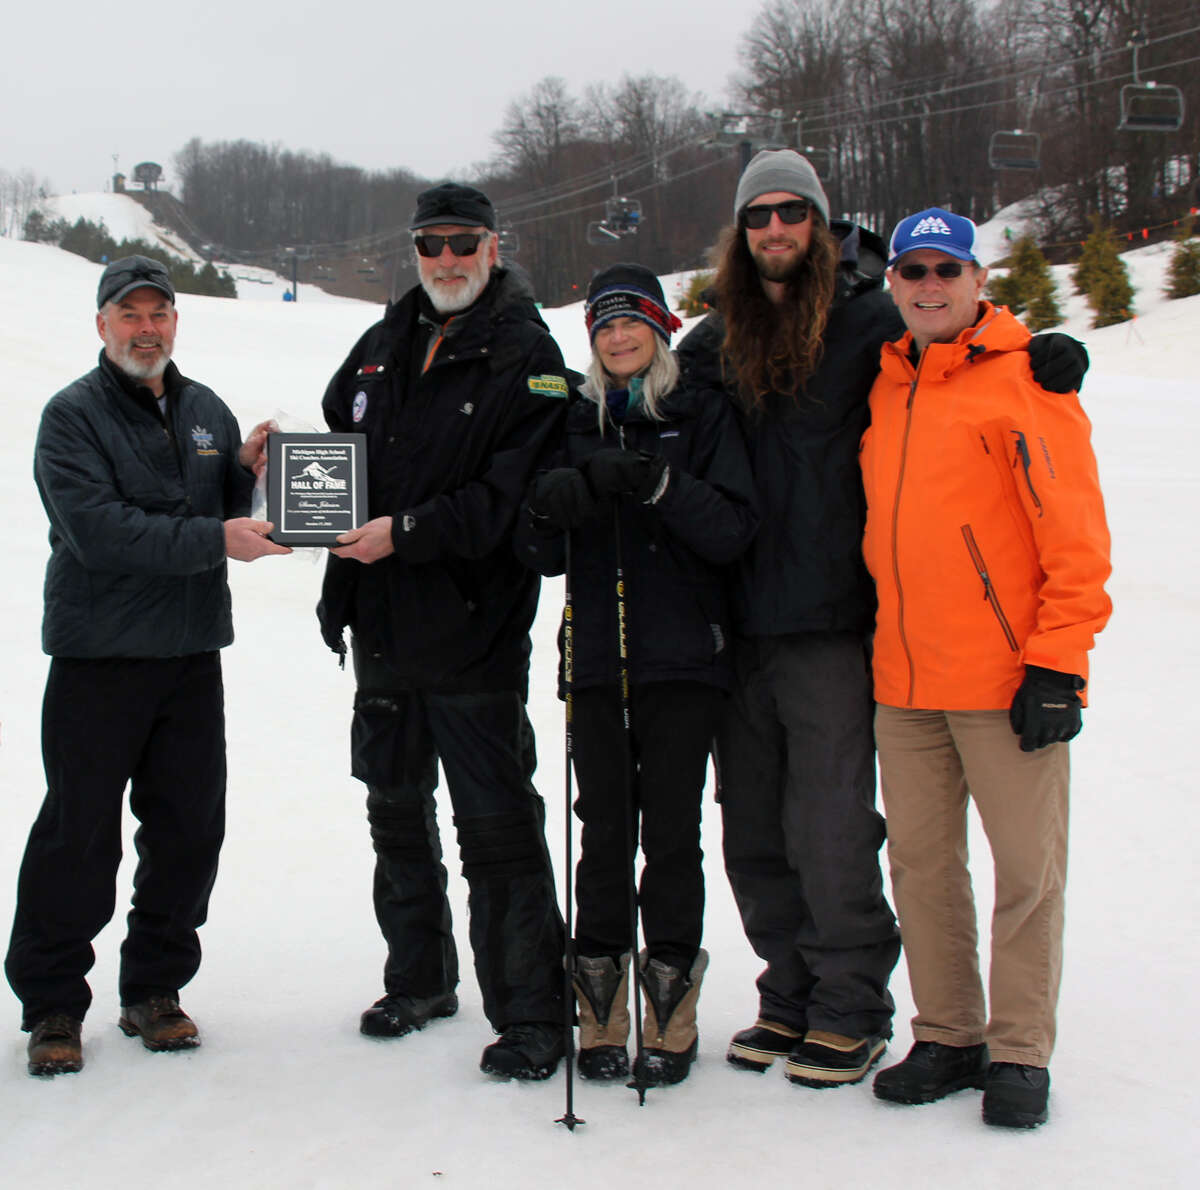 Shaun Johnson receives his MHSSCA Hall of Fame award at Crystal Mountain. (From left to right: Scott Papineau, Shaun Johnson, Chris Kitzman, Rory Johnson, and Steve Kermode.)